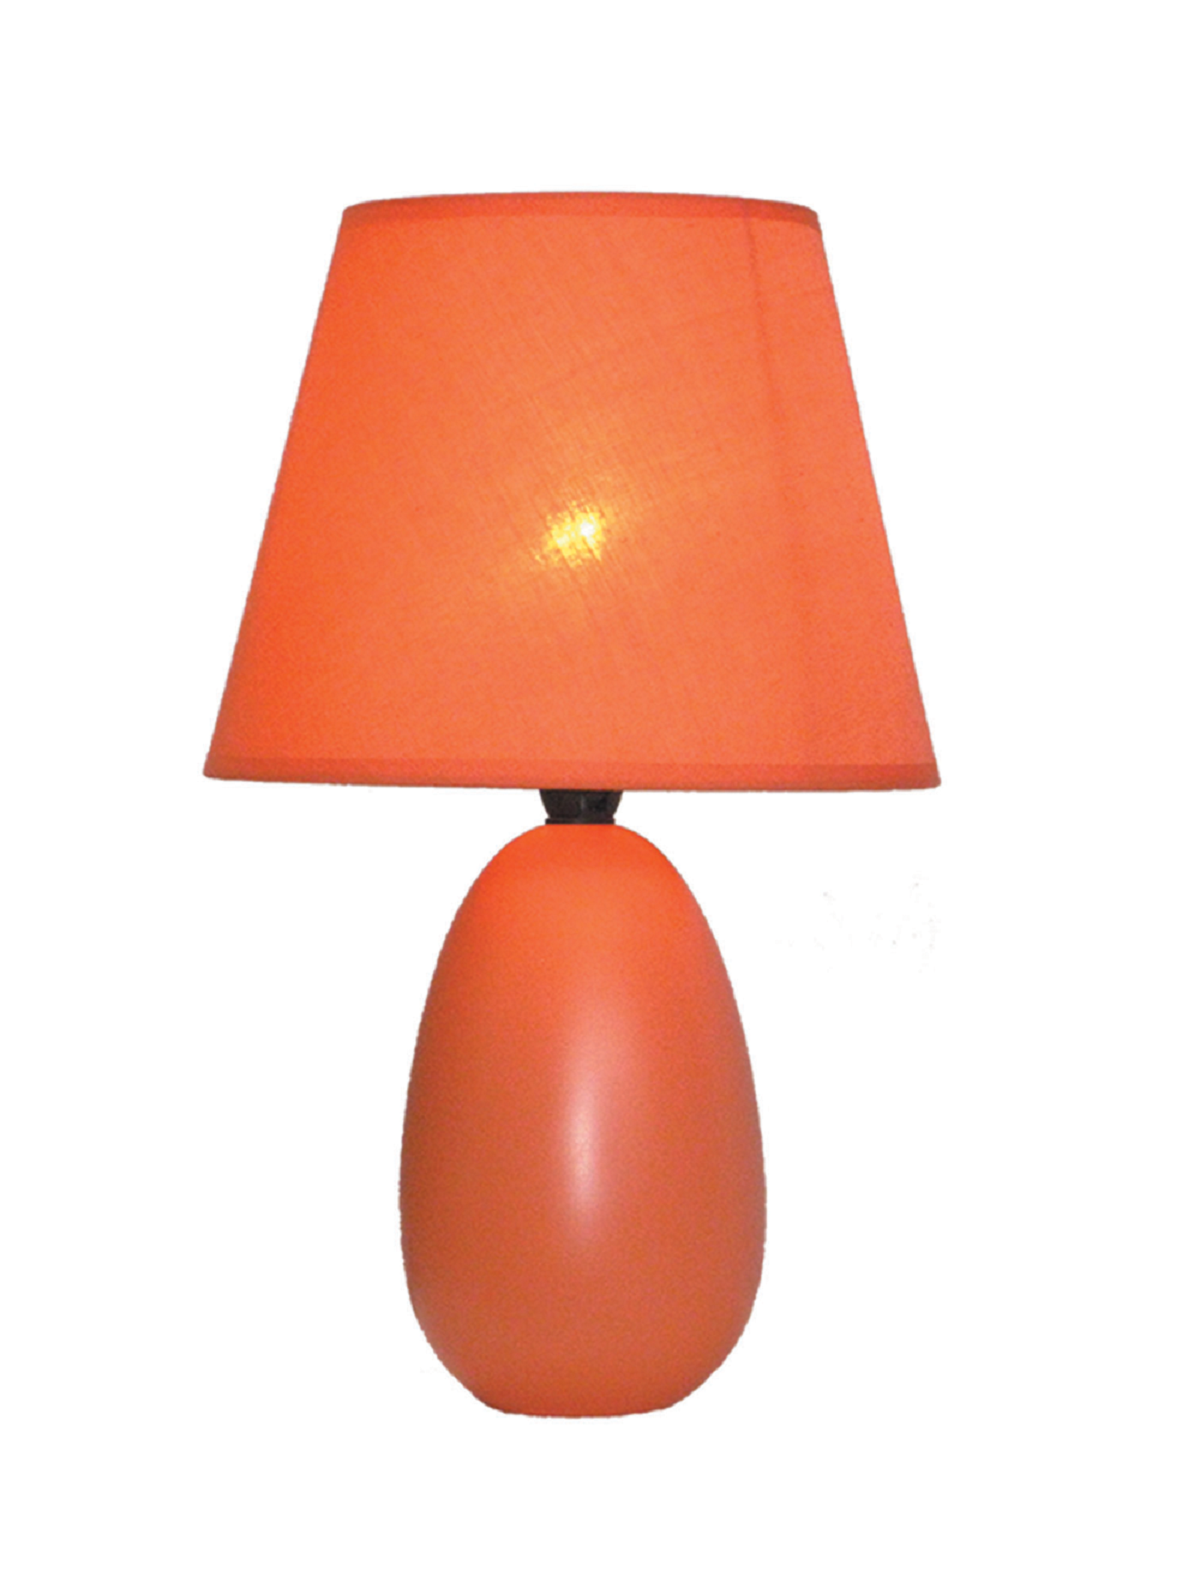 Simple Designs Small Orange Oval Ceramic Table Lamp